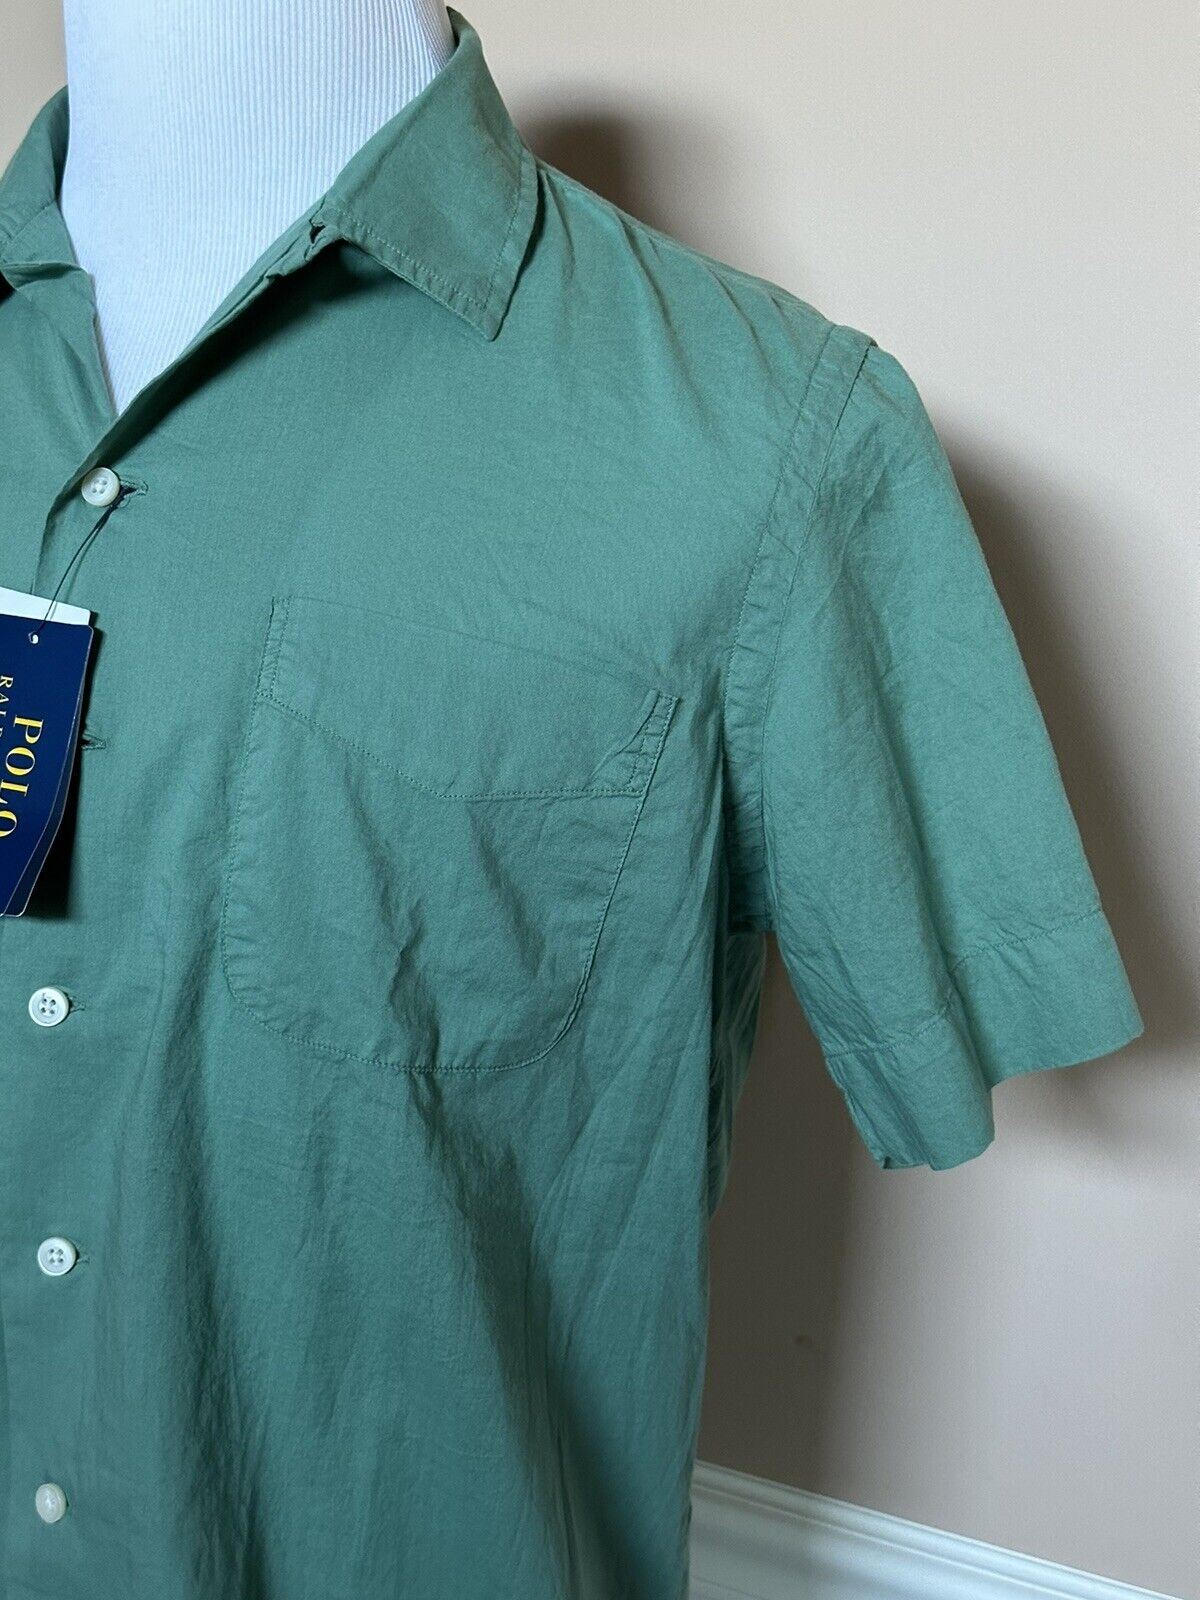 NWT Polo Ralph Lauren Men's Green Short Sleeve Dress Shirt Large Made in India